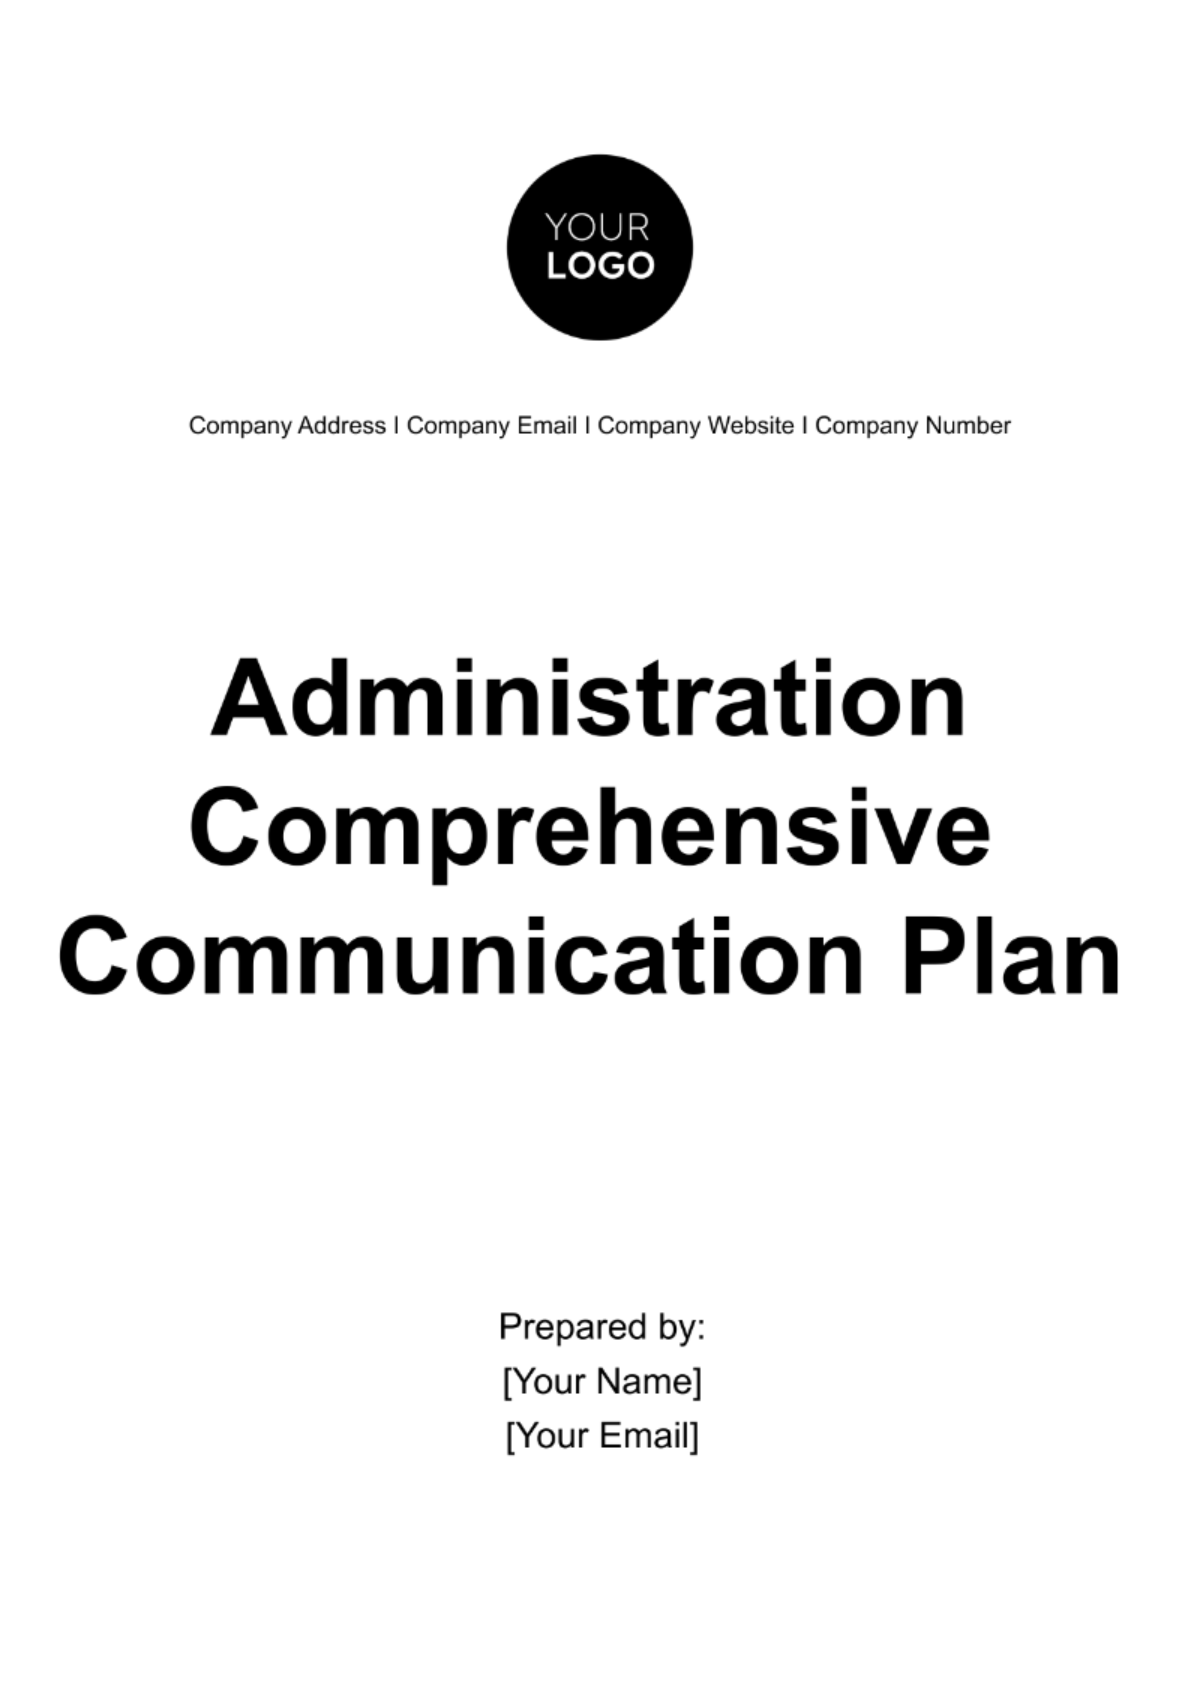 Administration Comprehensive Communication Plan Template